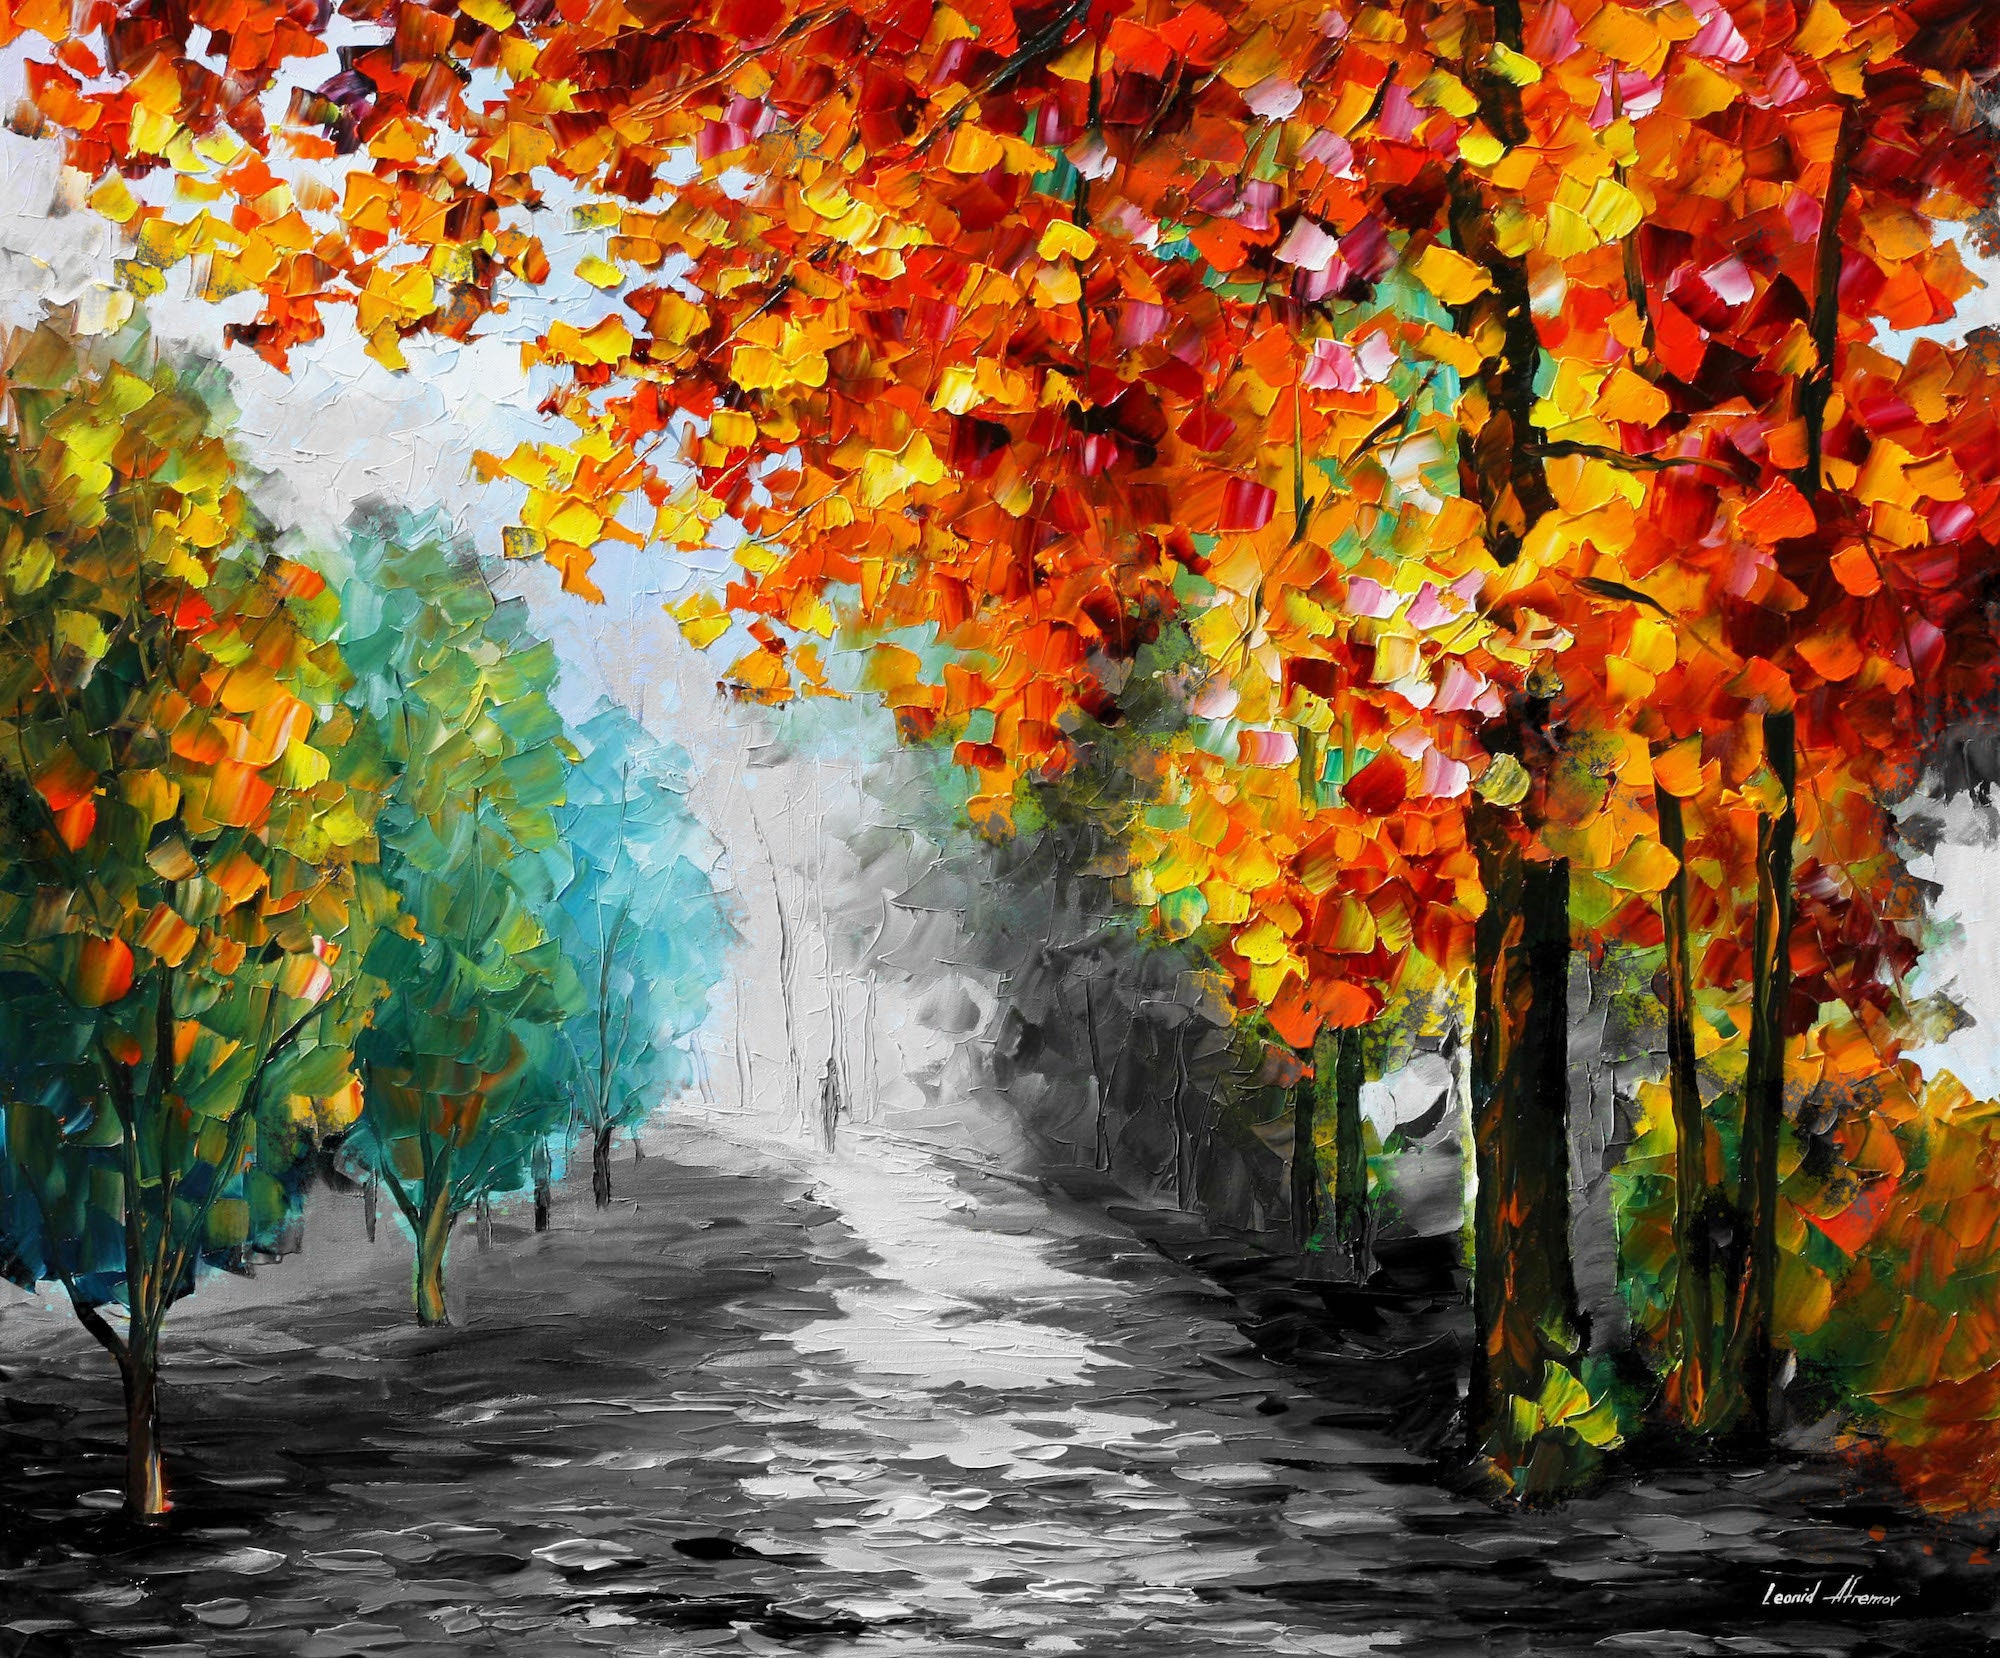 Autumn Woods Landscape Canvas Wall Art Print Picture Various Sizes 3 v